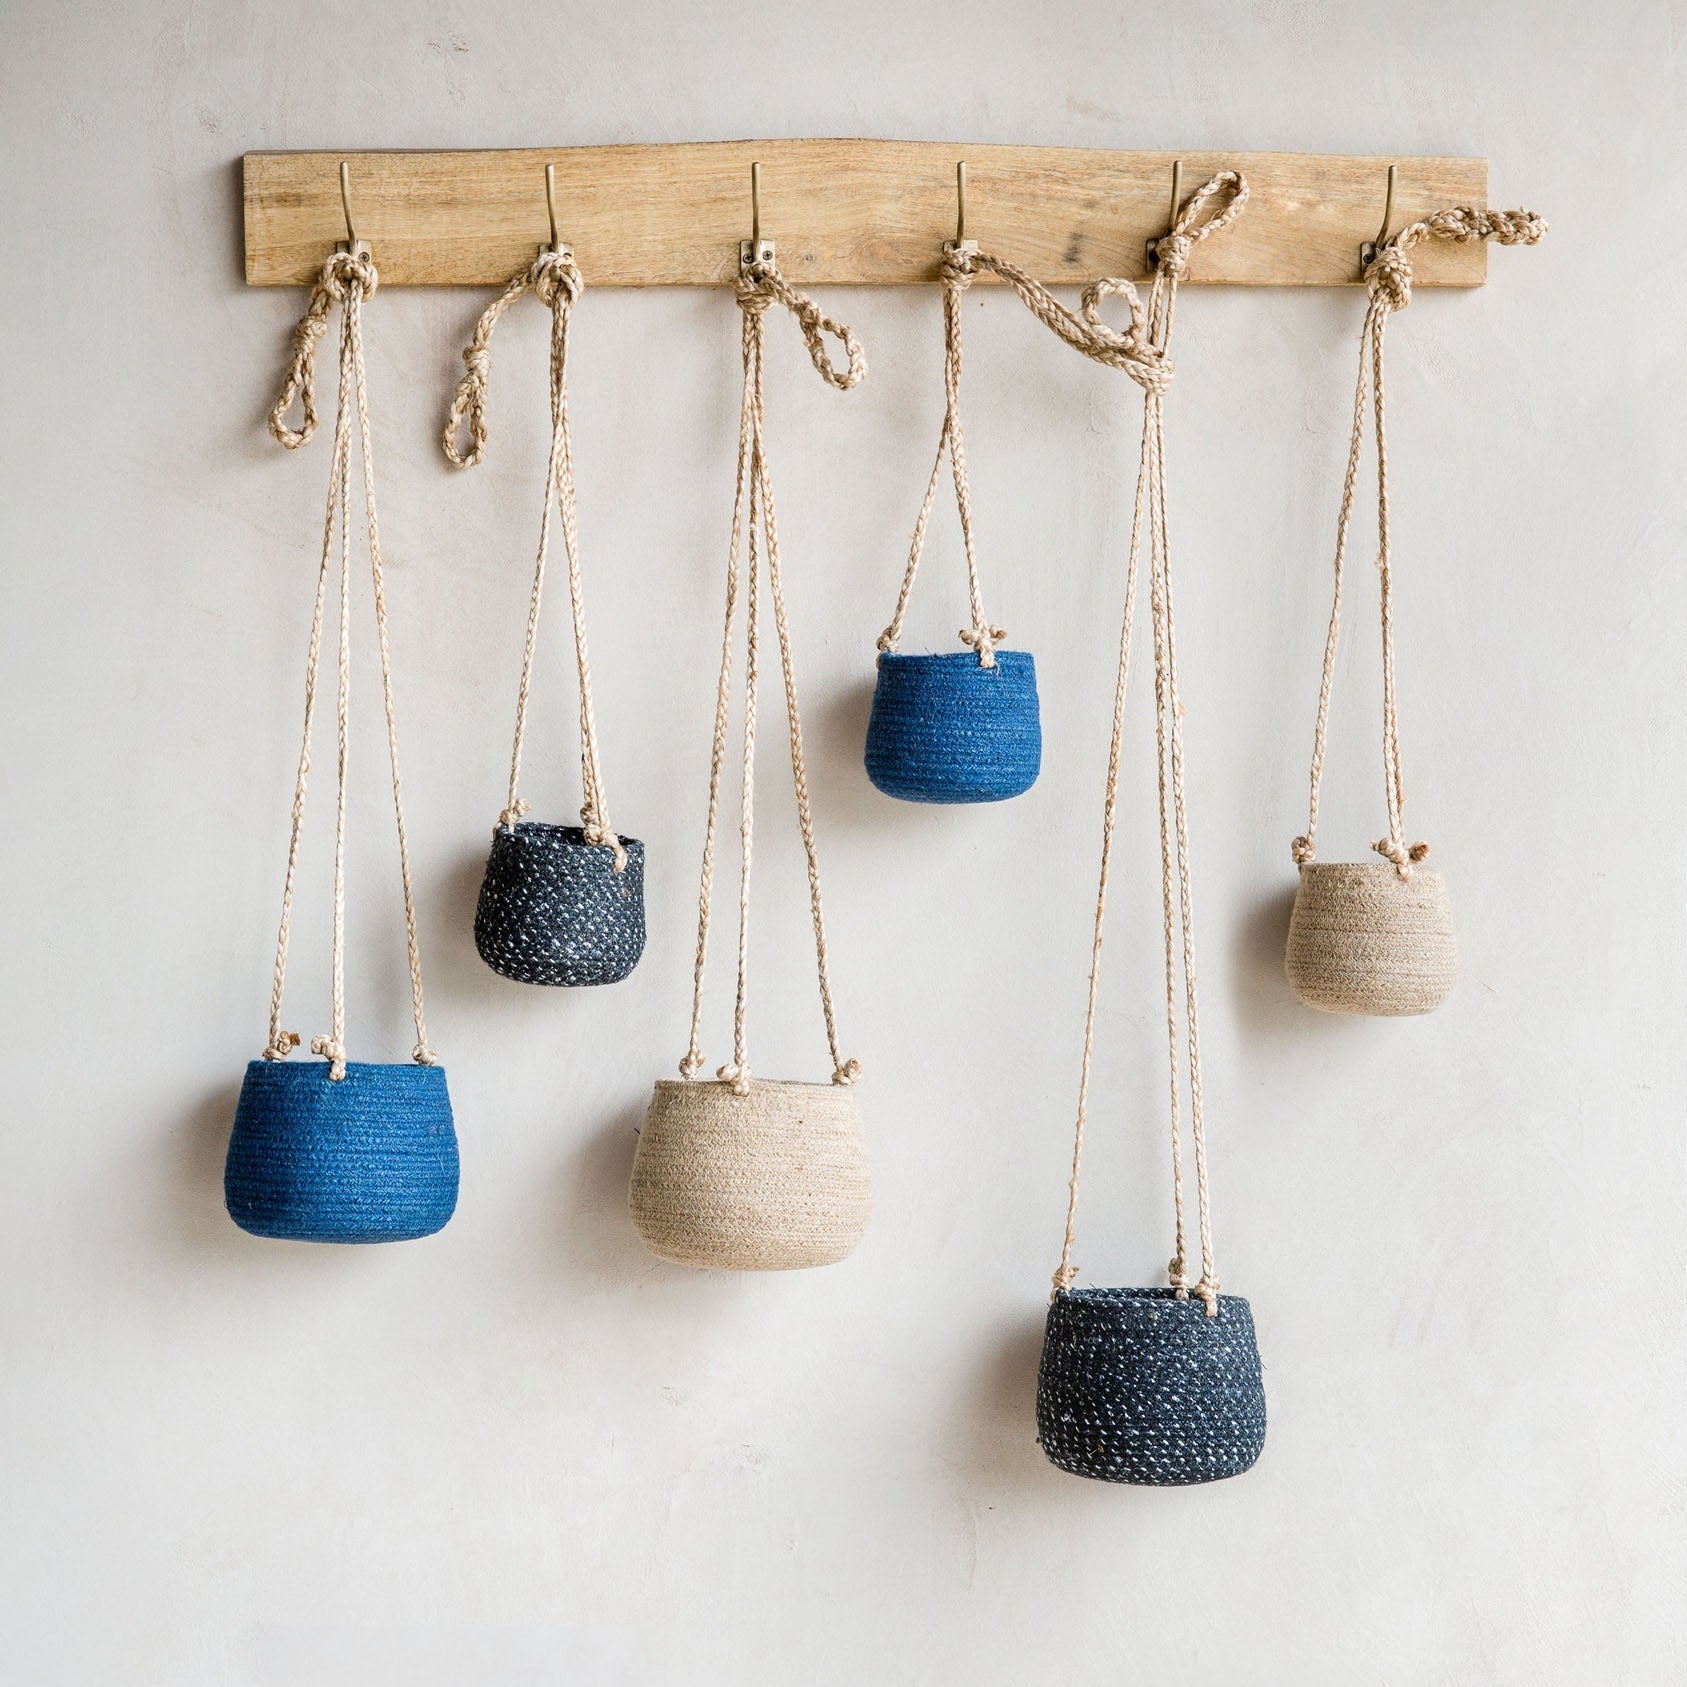 Jute Hanging Storage Basket - Small Woven Hanging Rope Woven